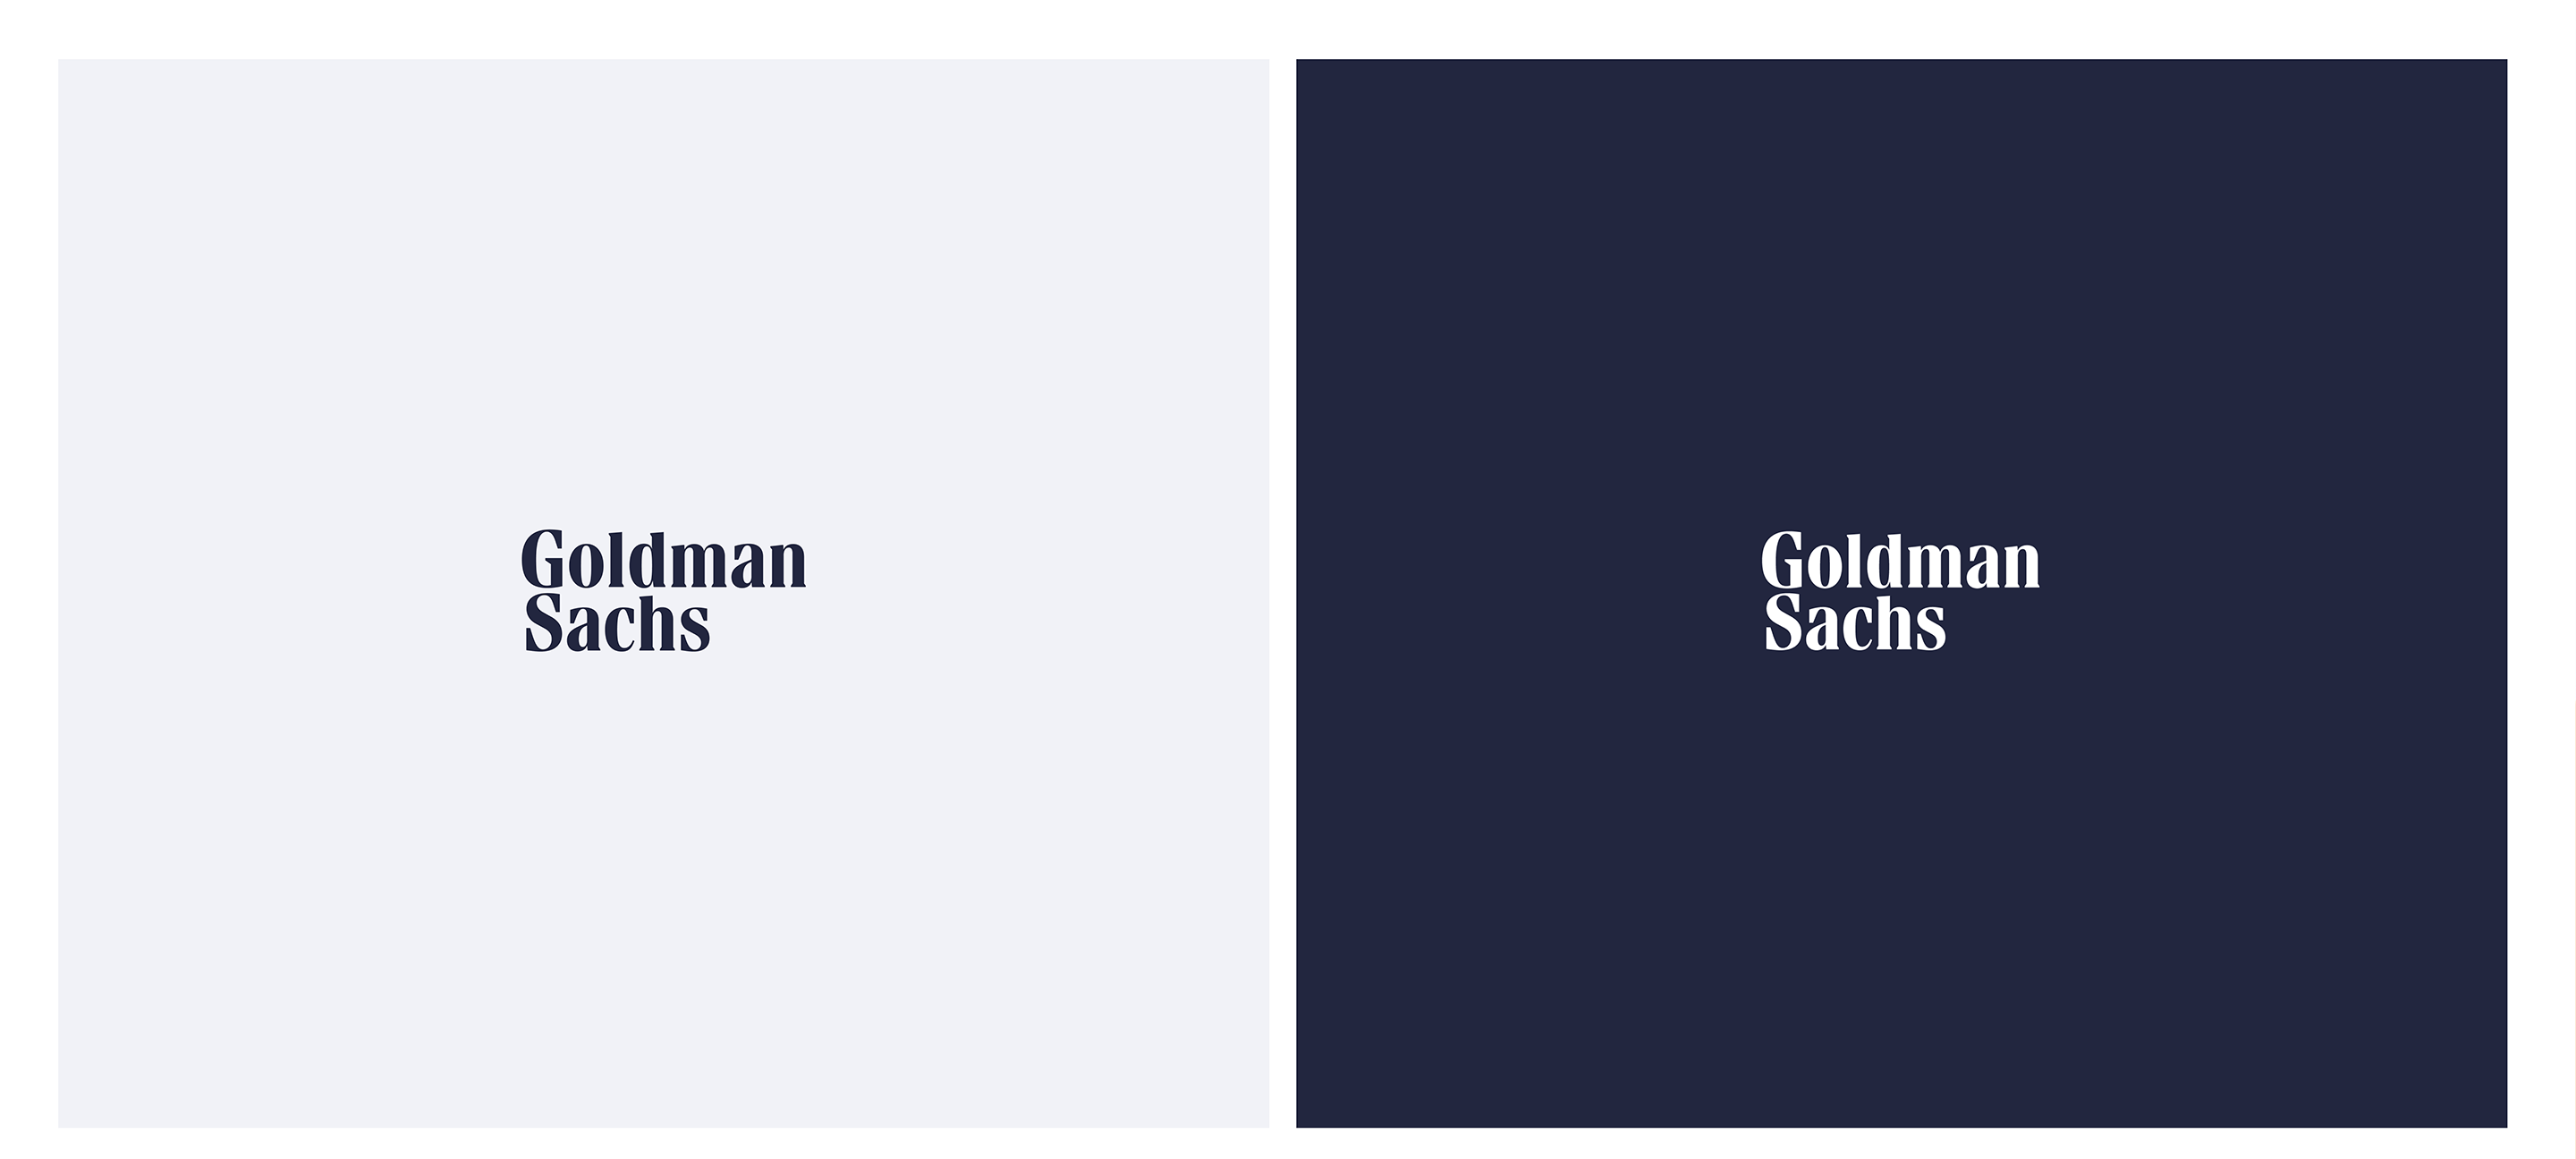 Goldman Sachs - Branding